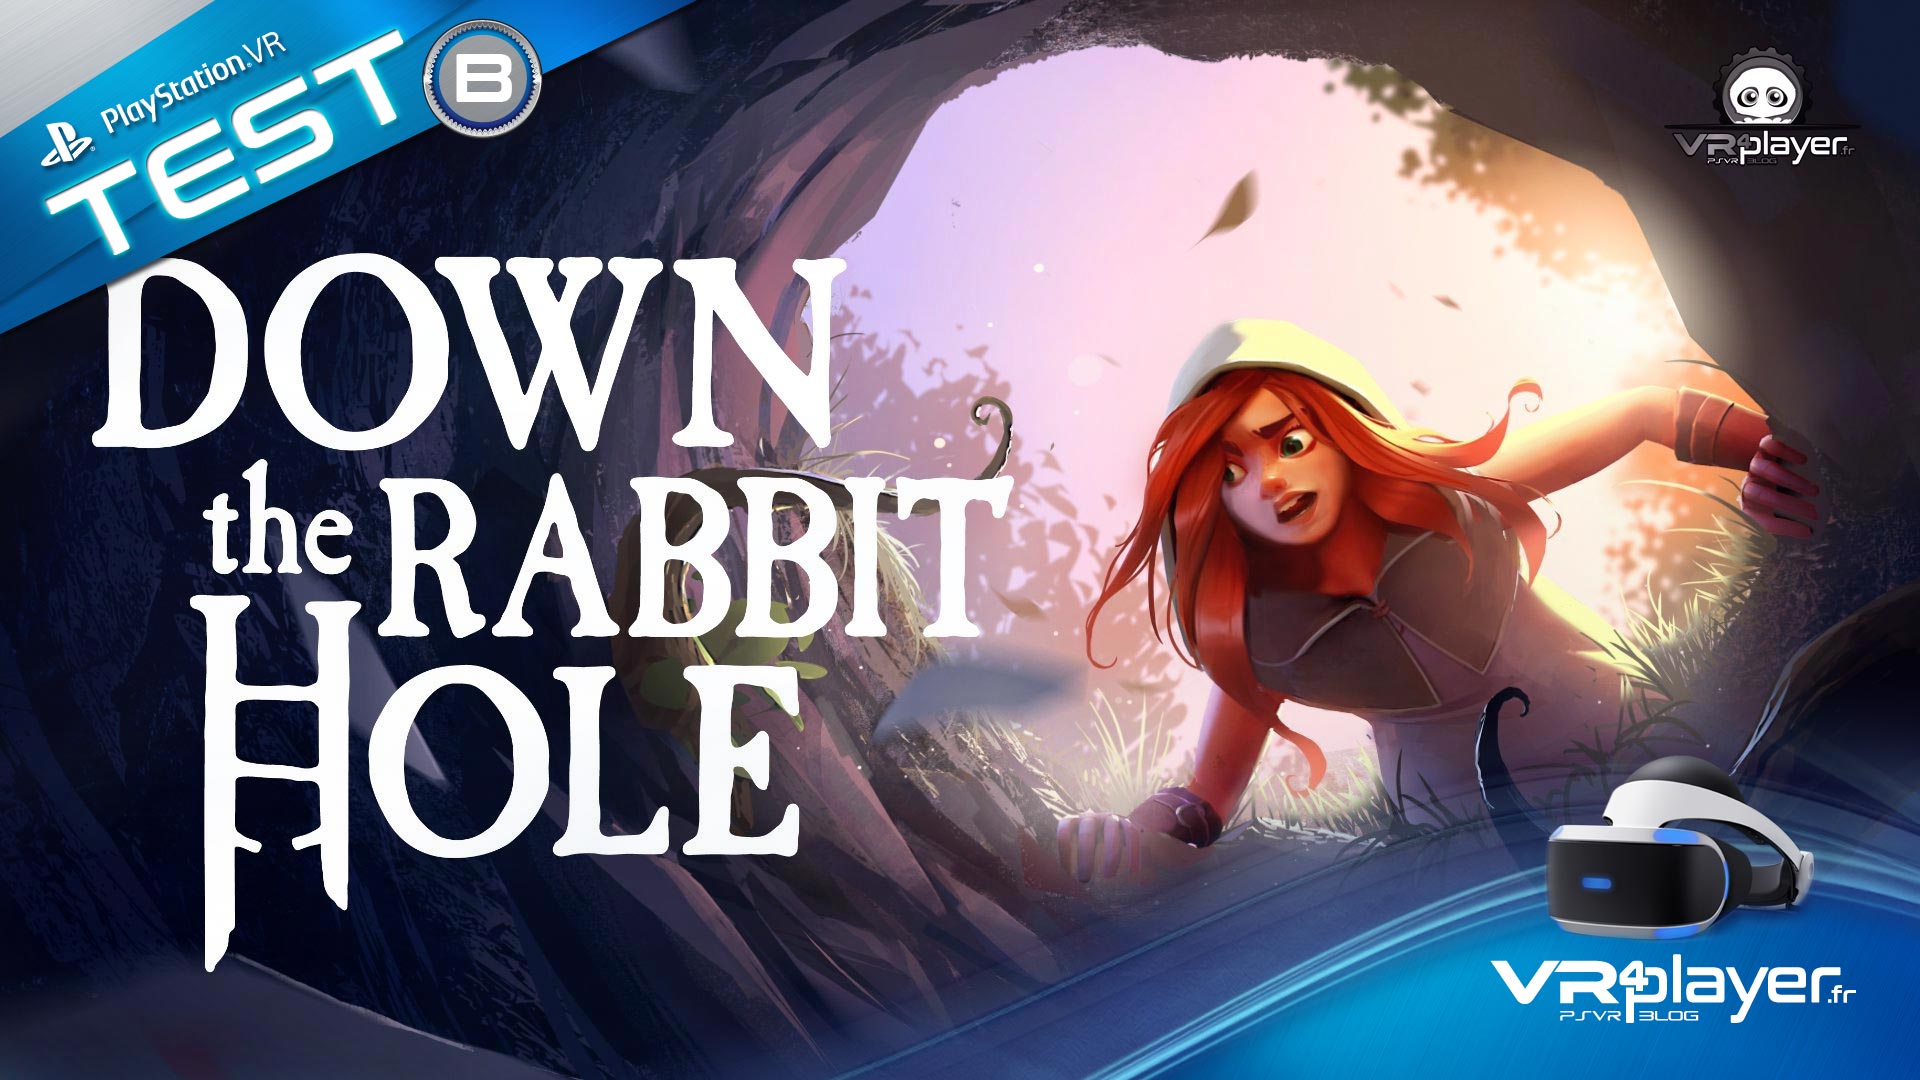 Rabbit hole игра. Down the Rabbit hole. Down the Rabbit hole VR Oculus. Down the Rabbit hole v430+01.03 -qu.